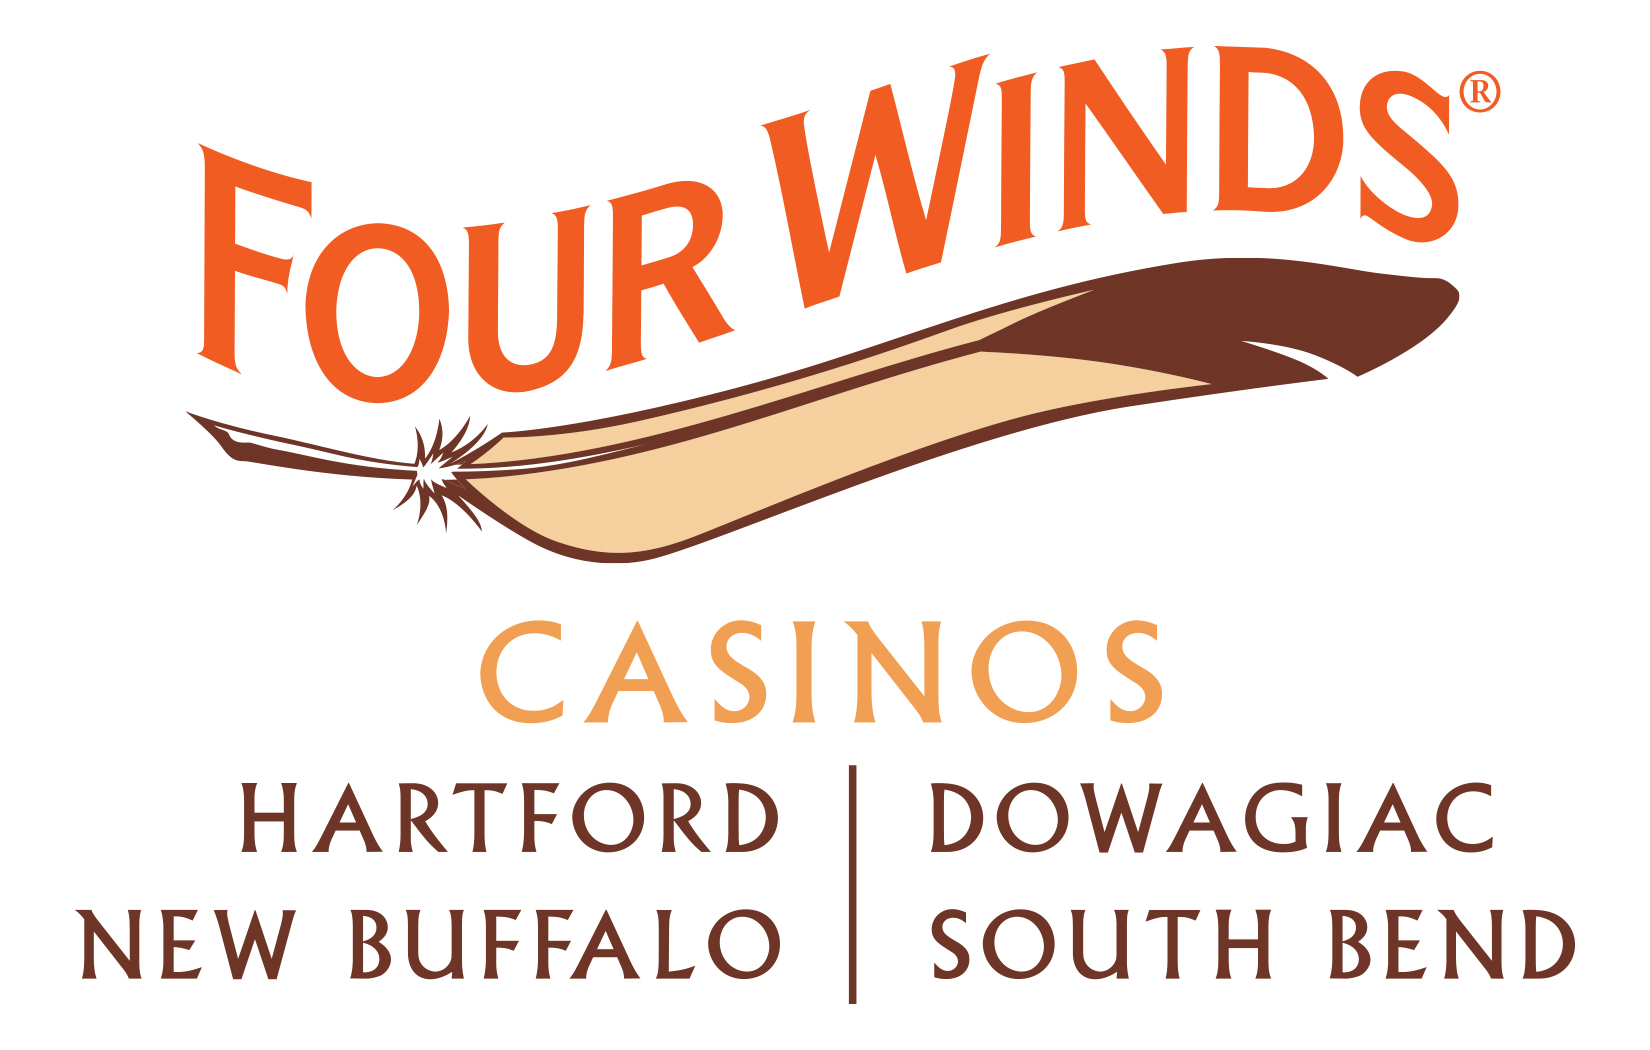 south bend four winds casino restaurants